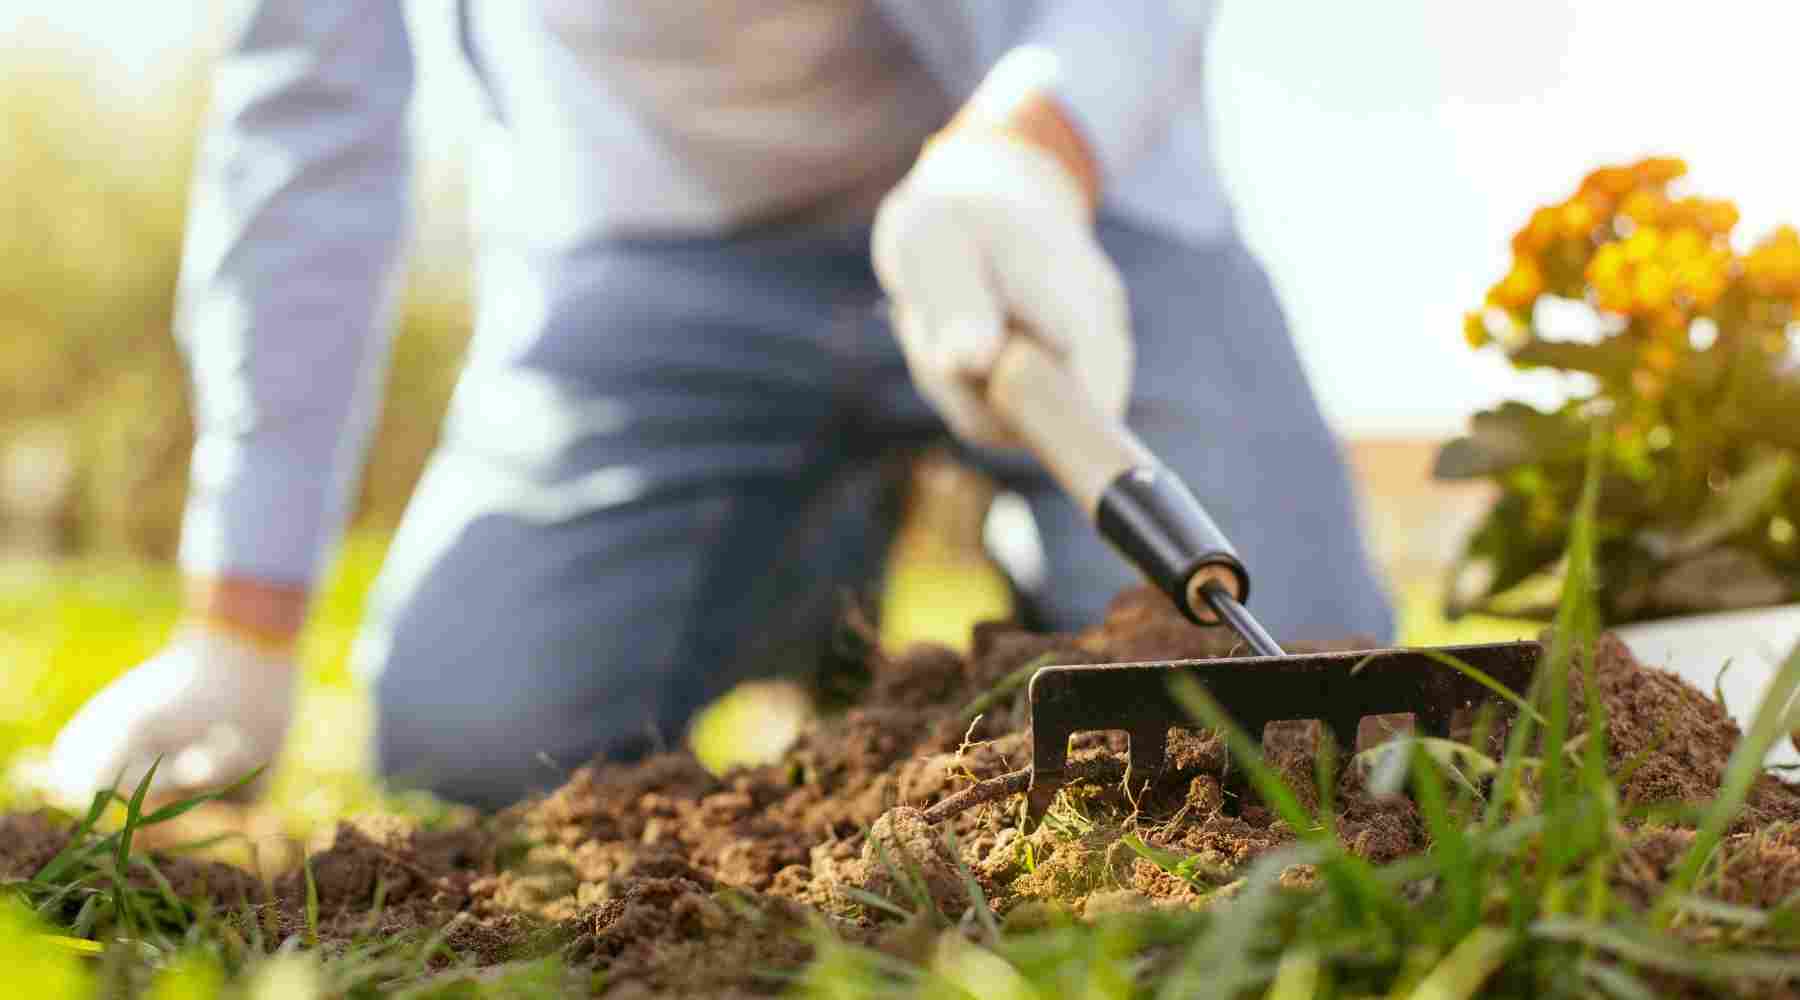 Hobbies that Make Money - Gardening